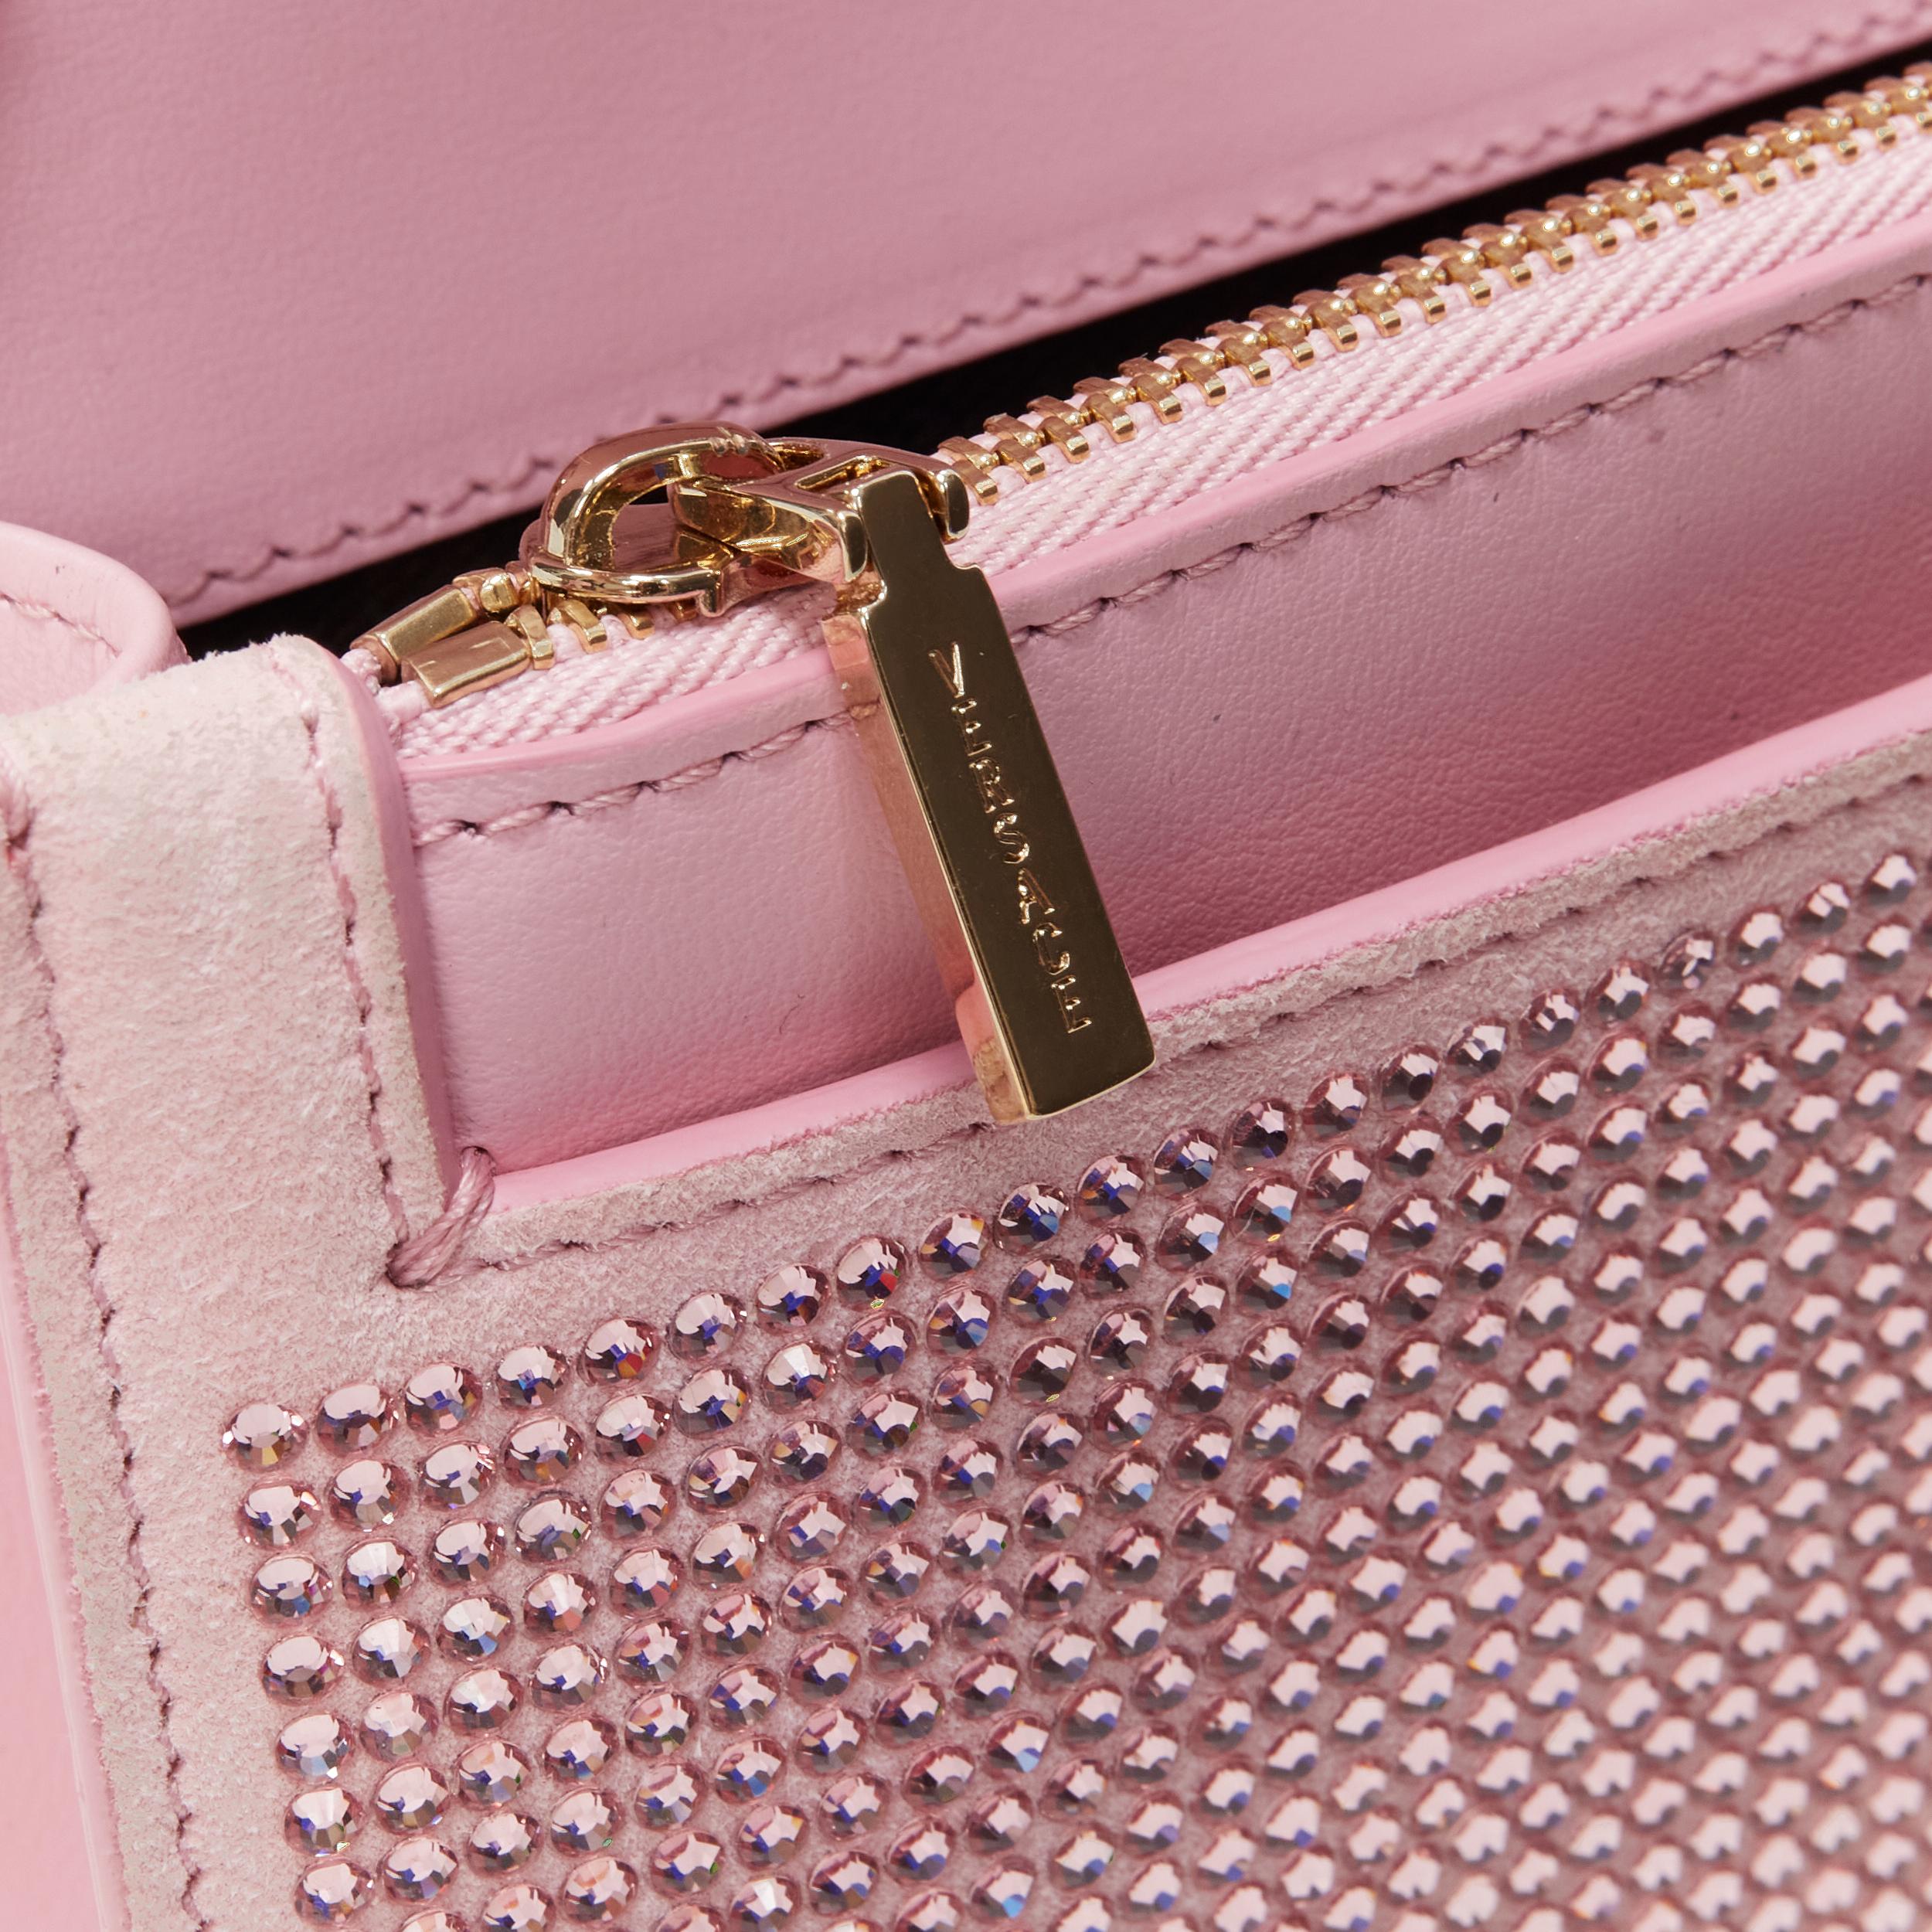 Women's VERSACE Medusa Palazzo gold emblem pink strass crystal embellished crossbody bag